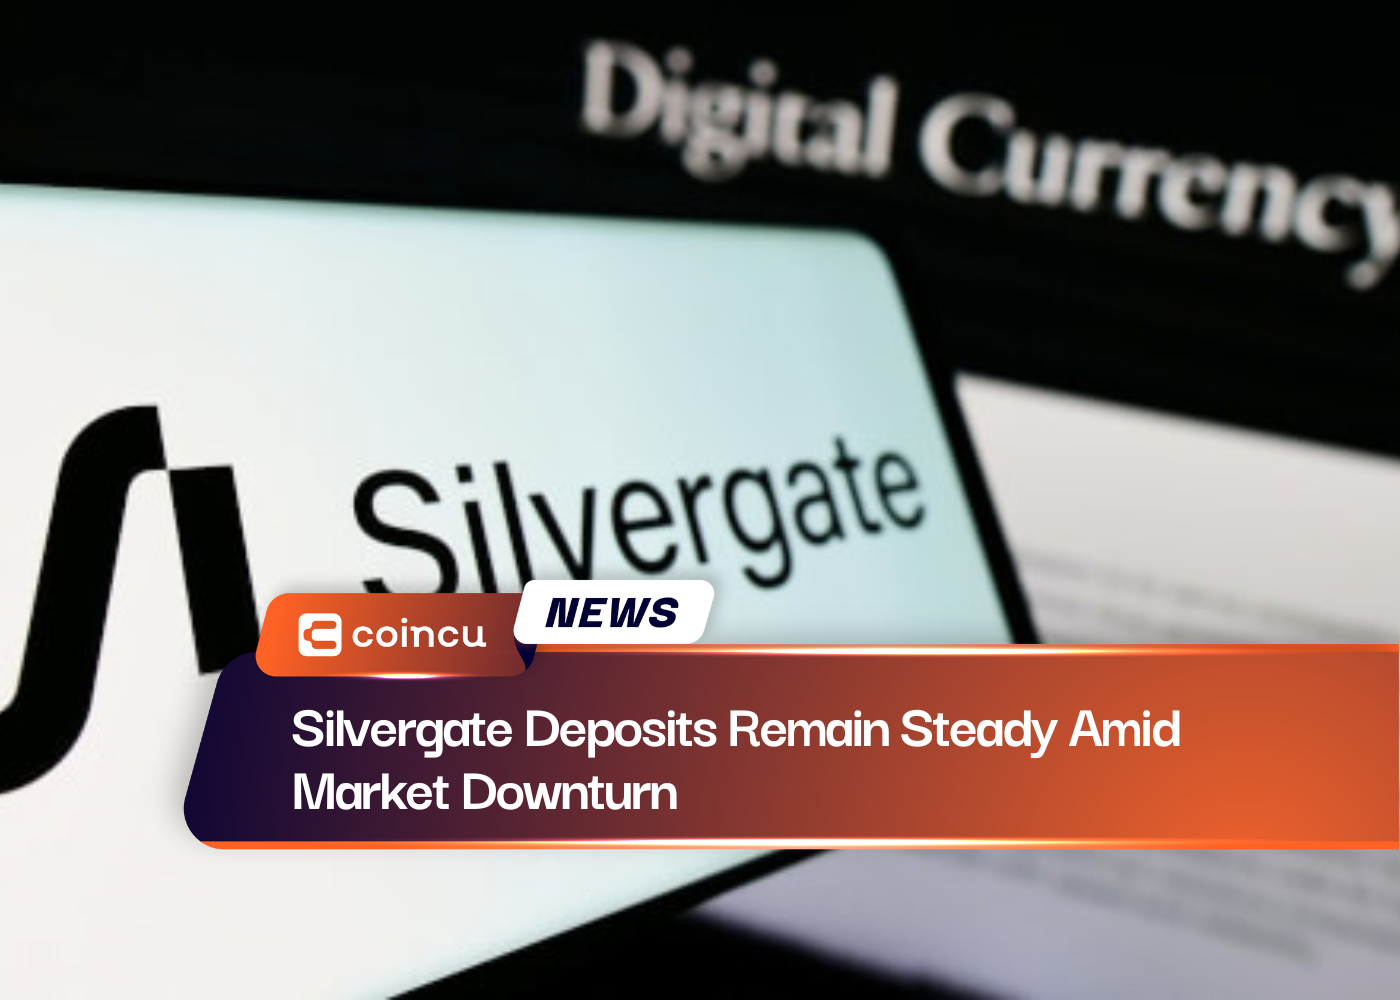 Silvergate Deposits Remain Steady Amid Market Downturn